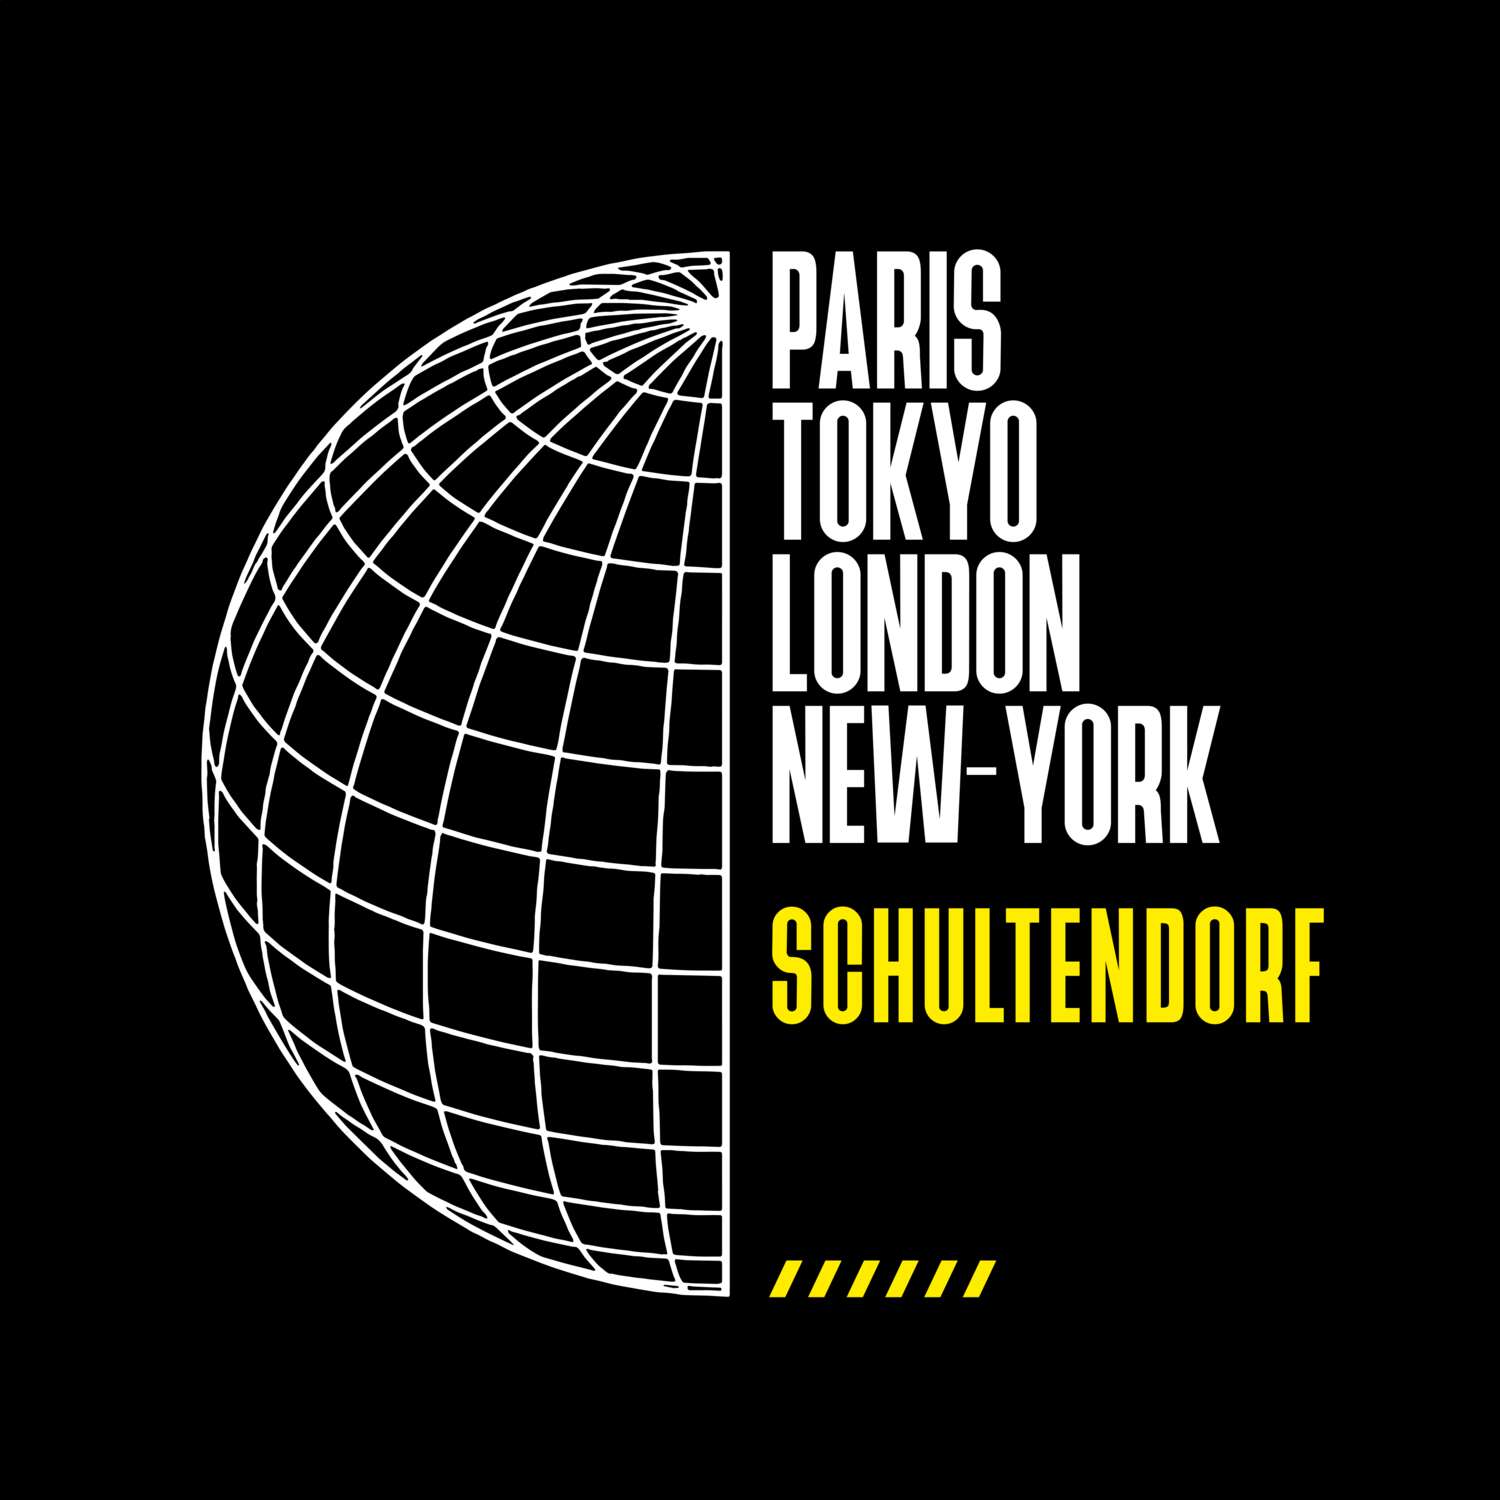 Schultendorf T-Shirt »Paris Tokyo London«